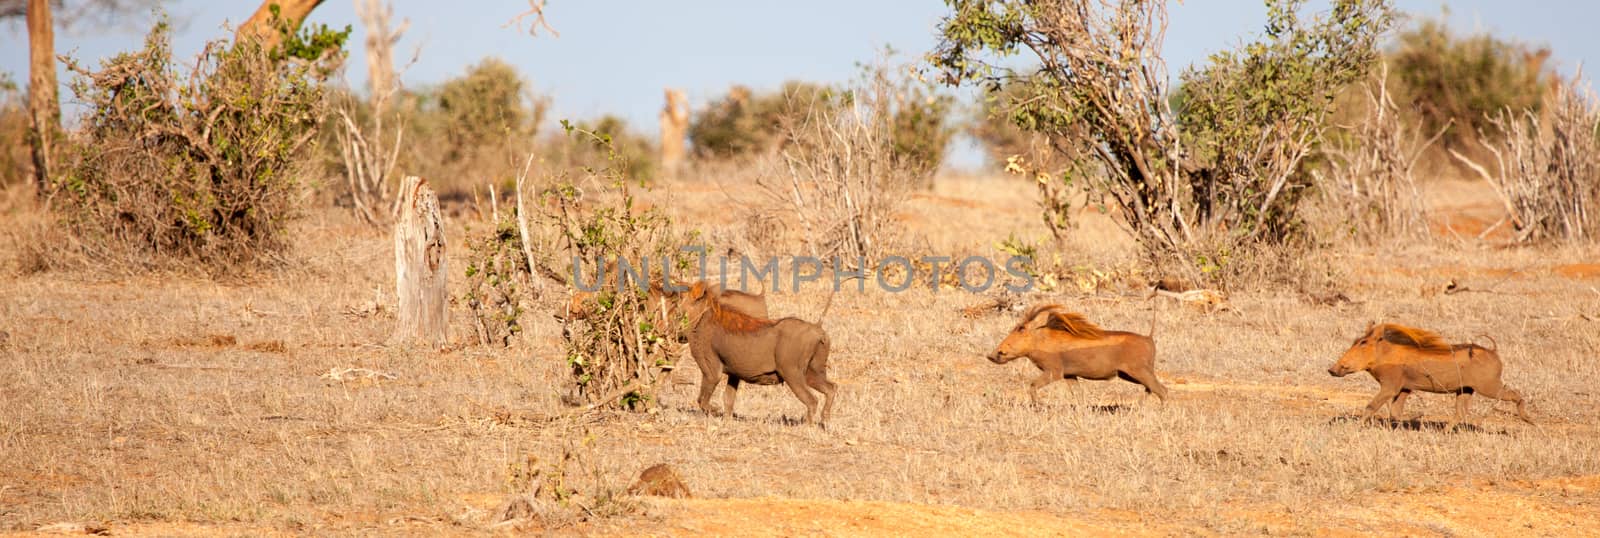 Wild boar running through the savannah of Kenya